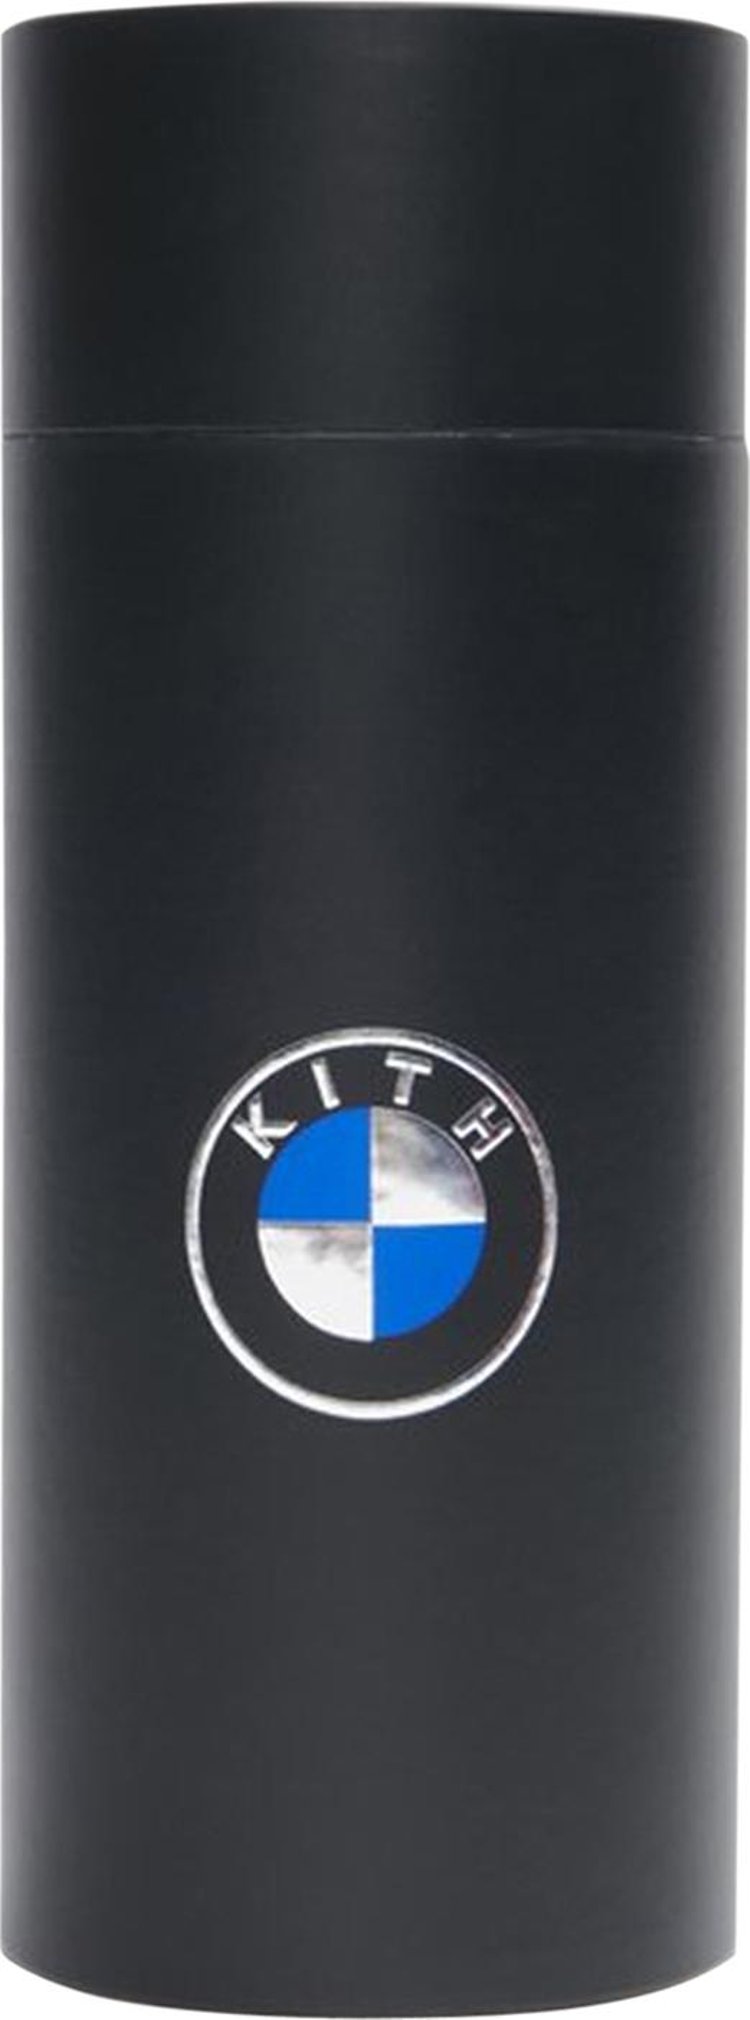 Kith For BMW Watchroll 'Black'